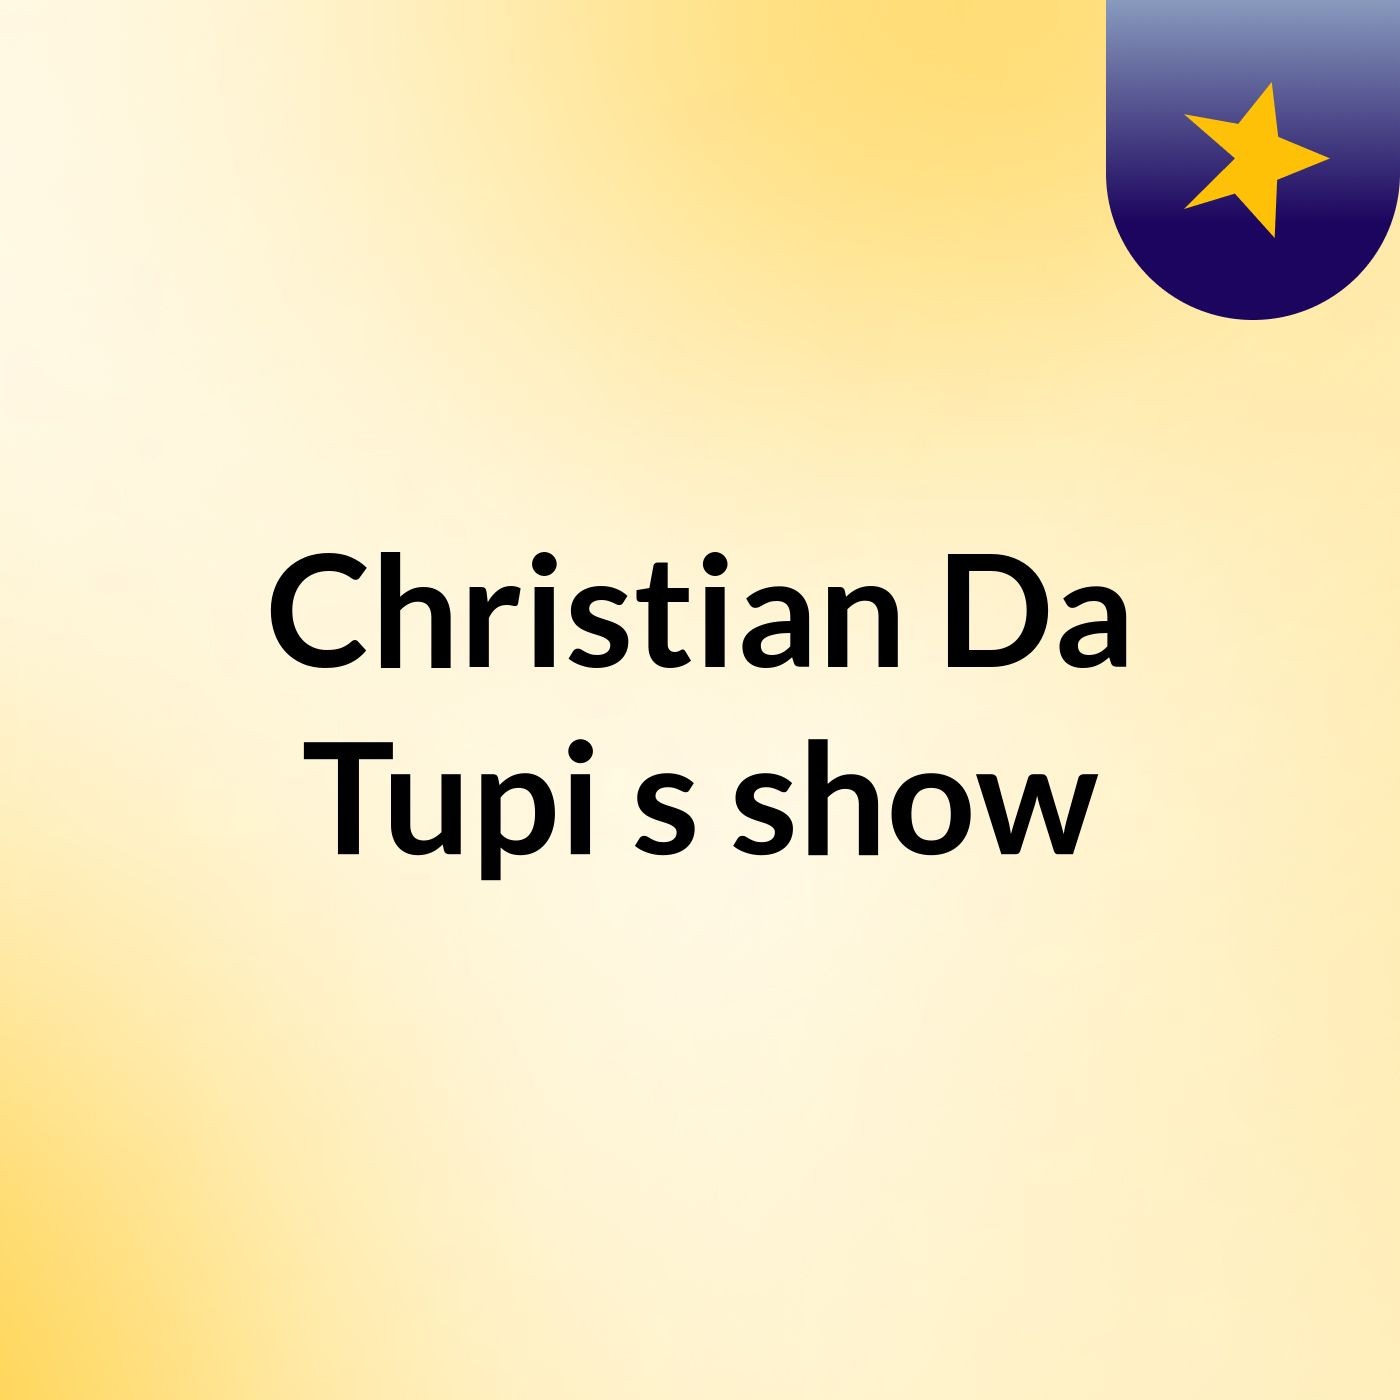 Christian Da Tupi's show